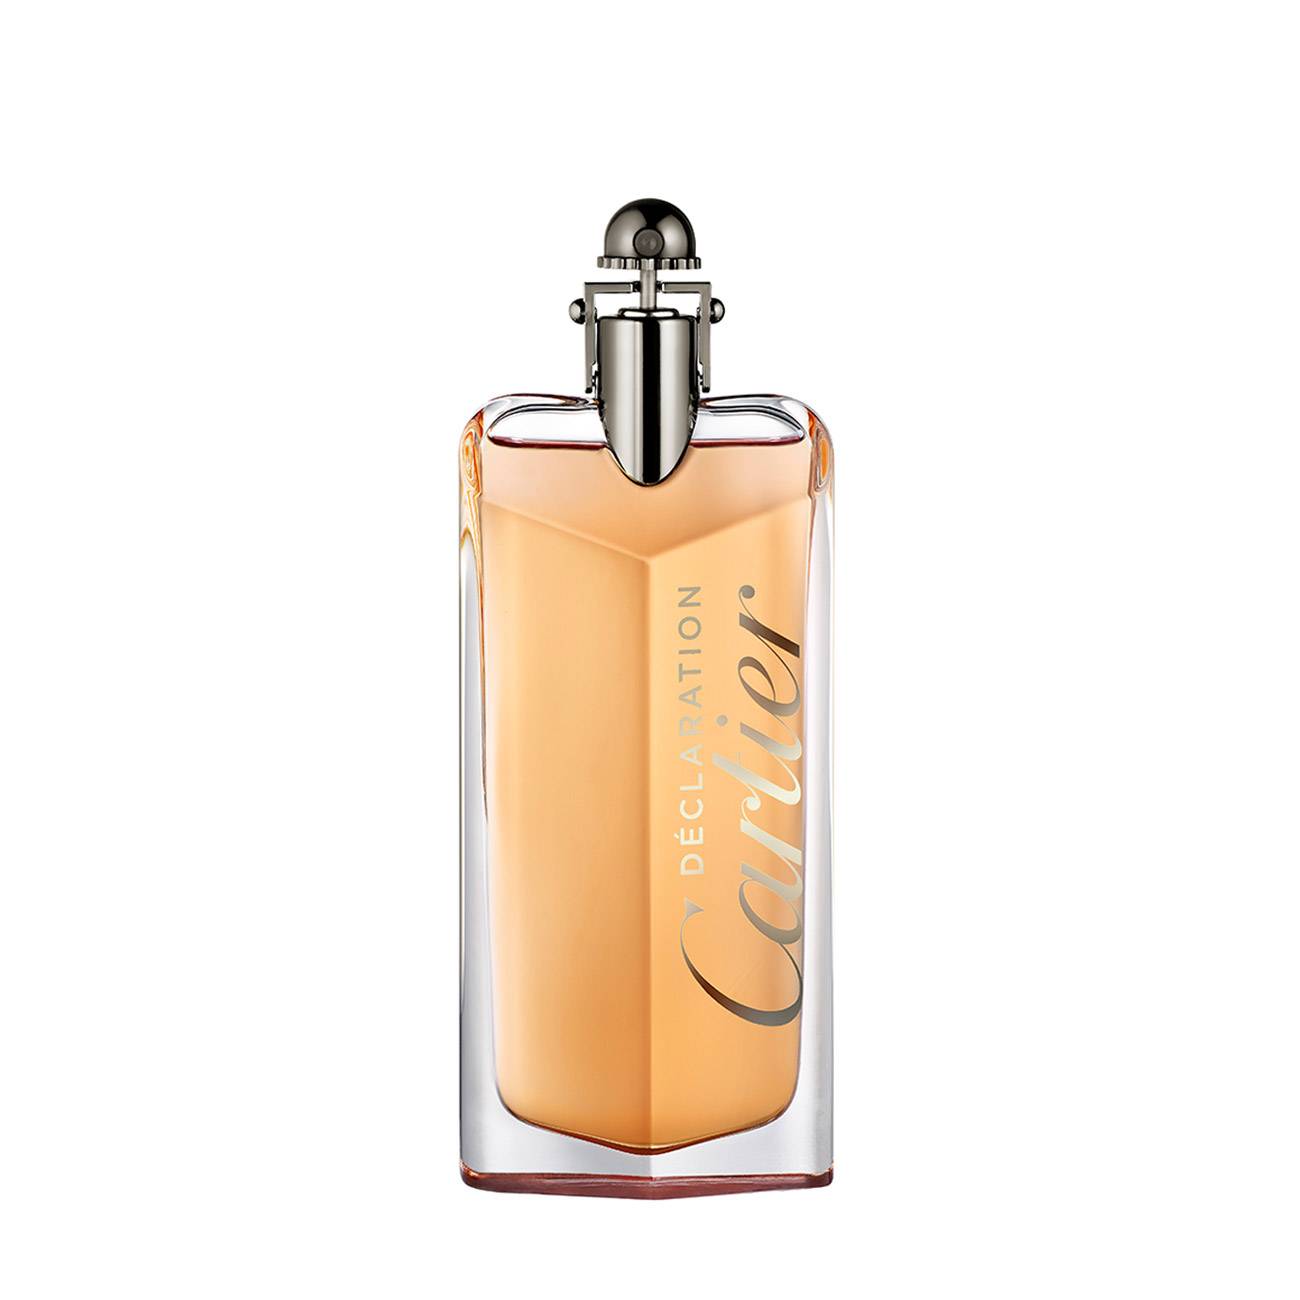 Apa de Parfum Cartier DECLARATION 100ml cu comanda online